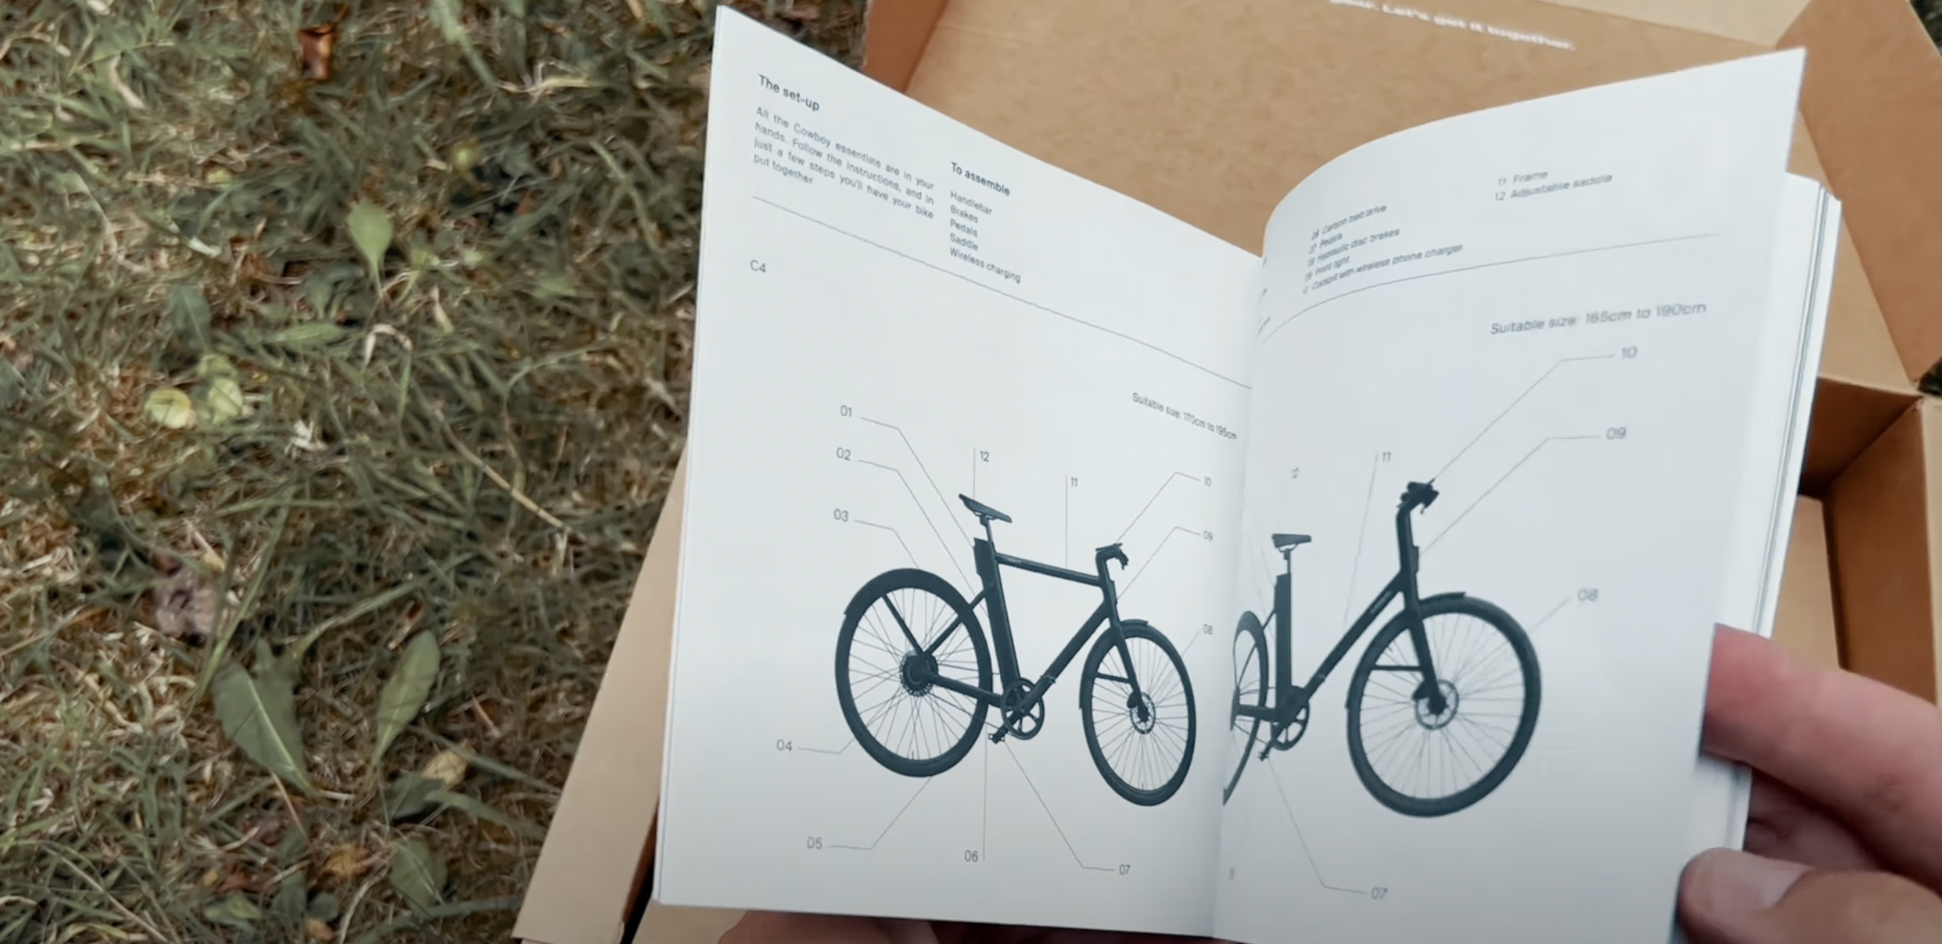 cowboy manual of bicycle